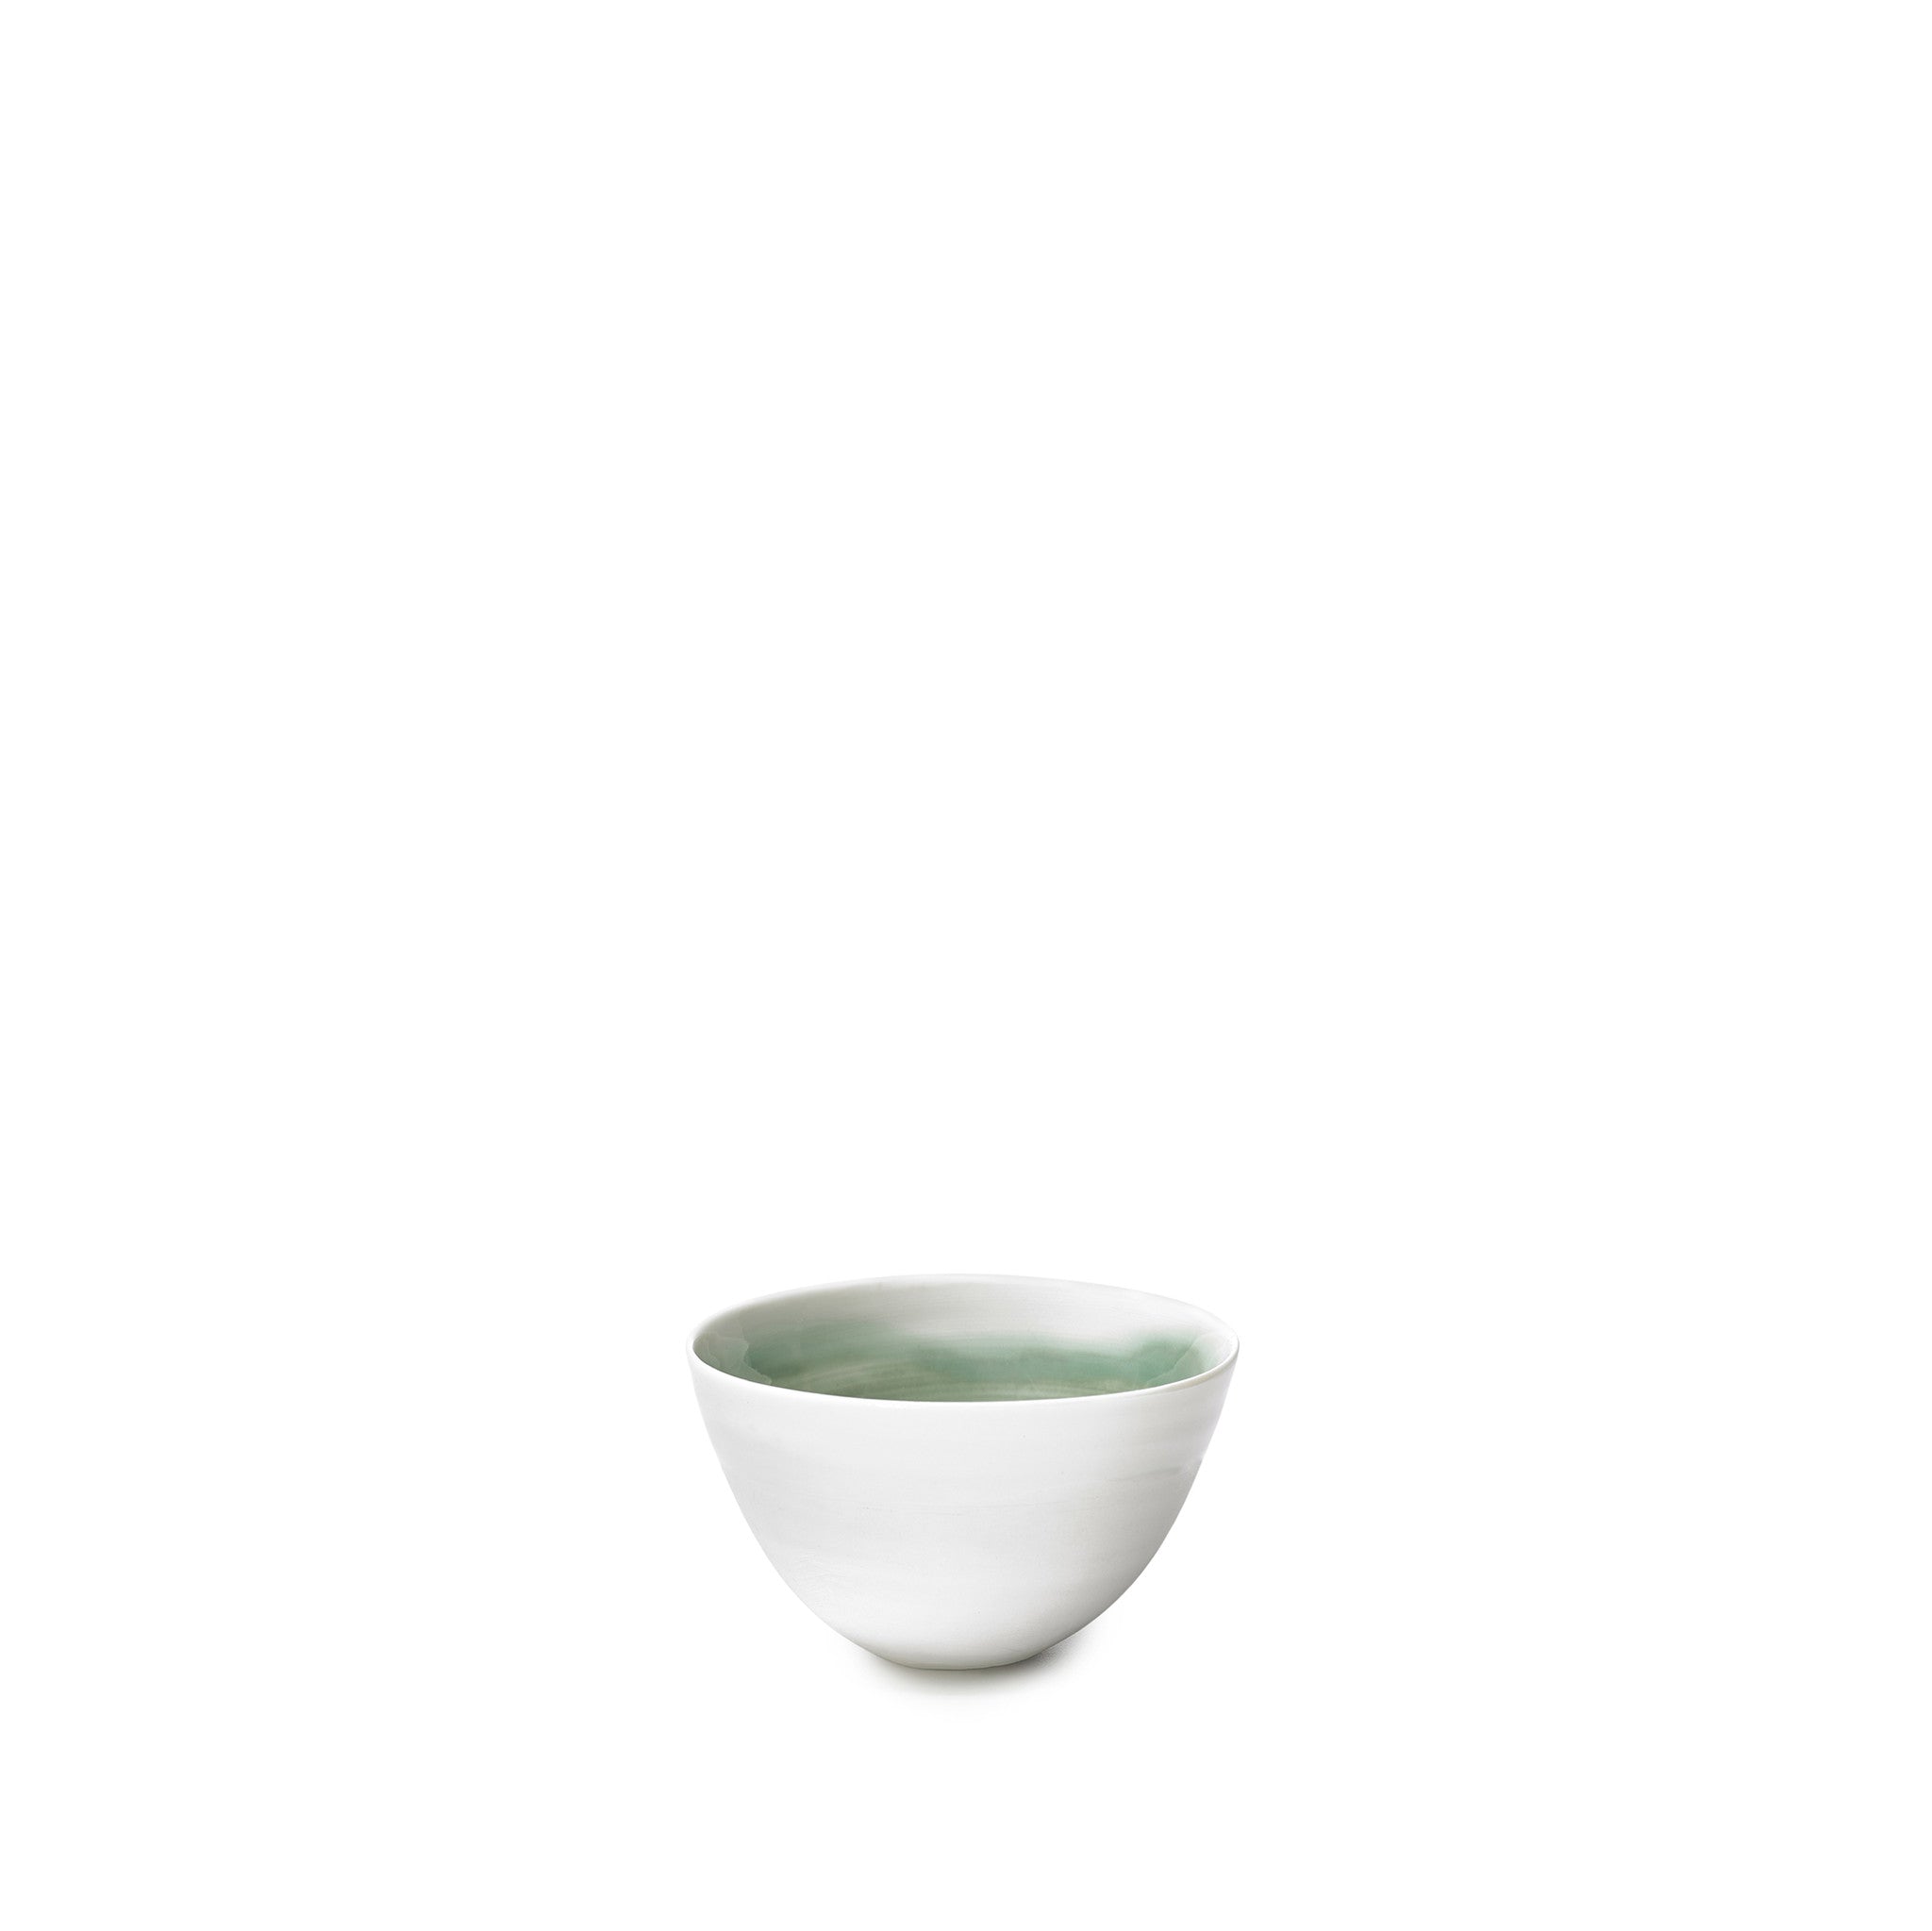 Small Dark Green Porcelain Bowl with White Edge, 8cm